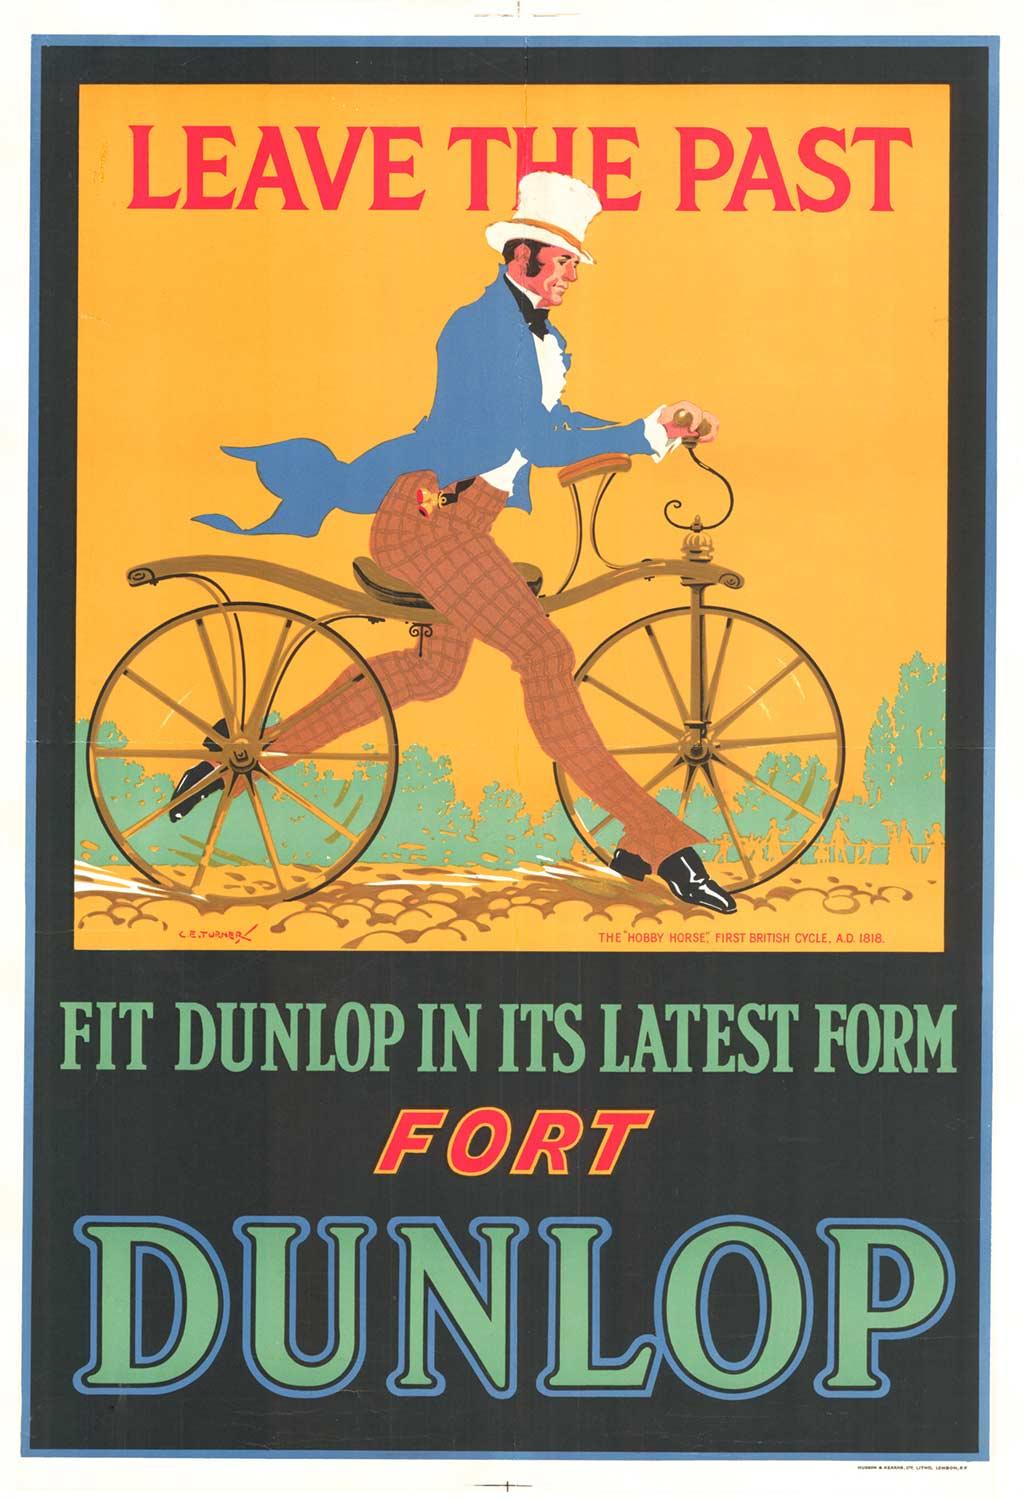 Charles Edward Turner Figurative Print - Original "Fort Dunlop", Leave the Past, vintage bicycle poster